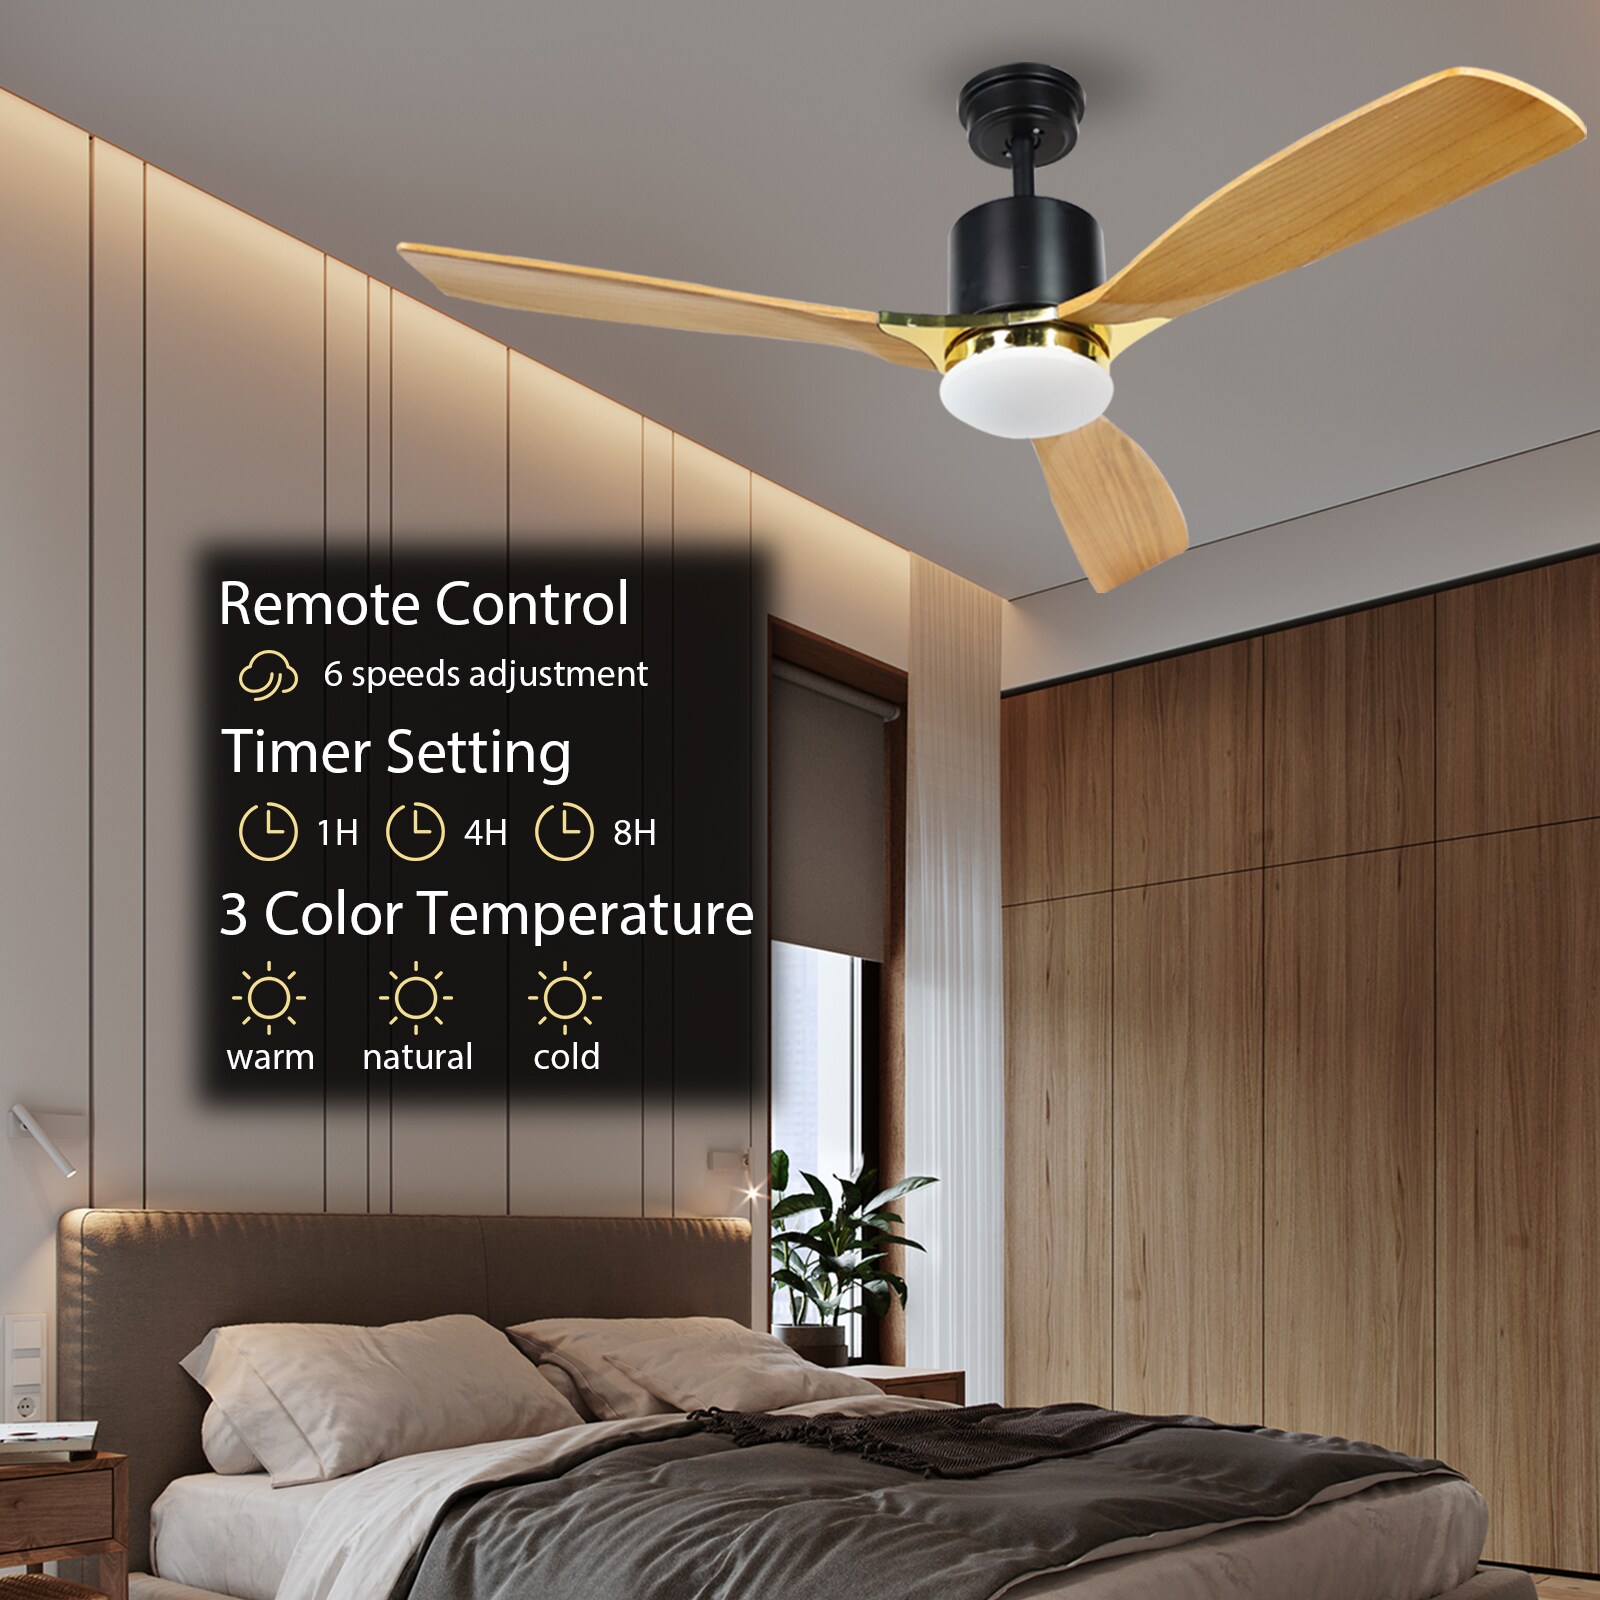 Ceiling Fan With Light Remote Control Chandelier Light 22.6 Inch Modern Bedroom 